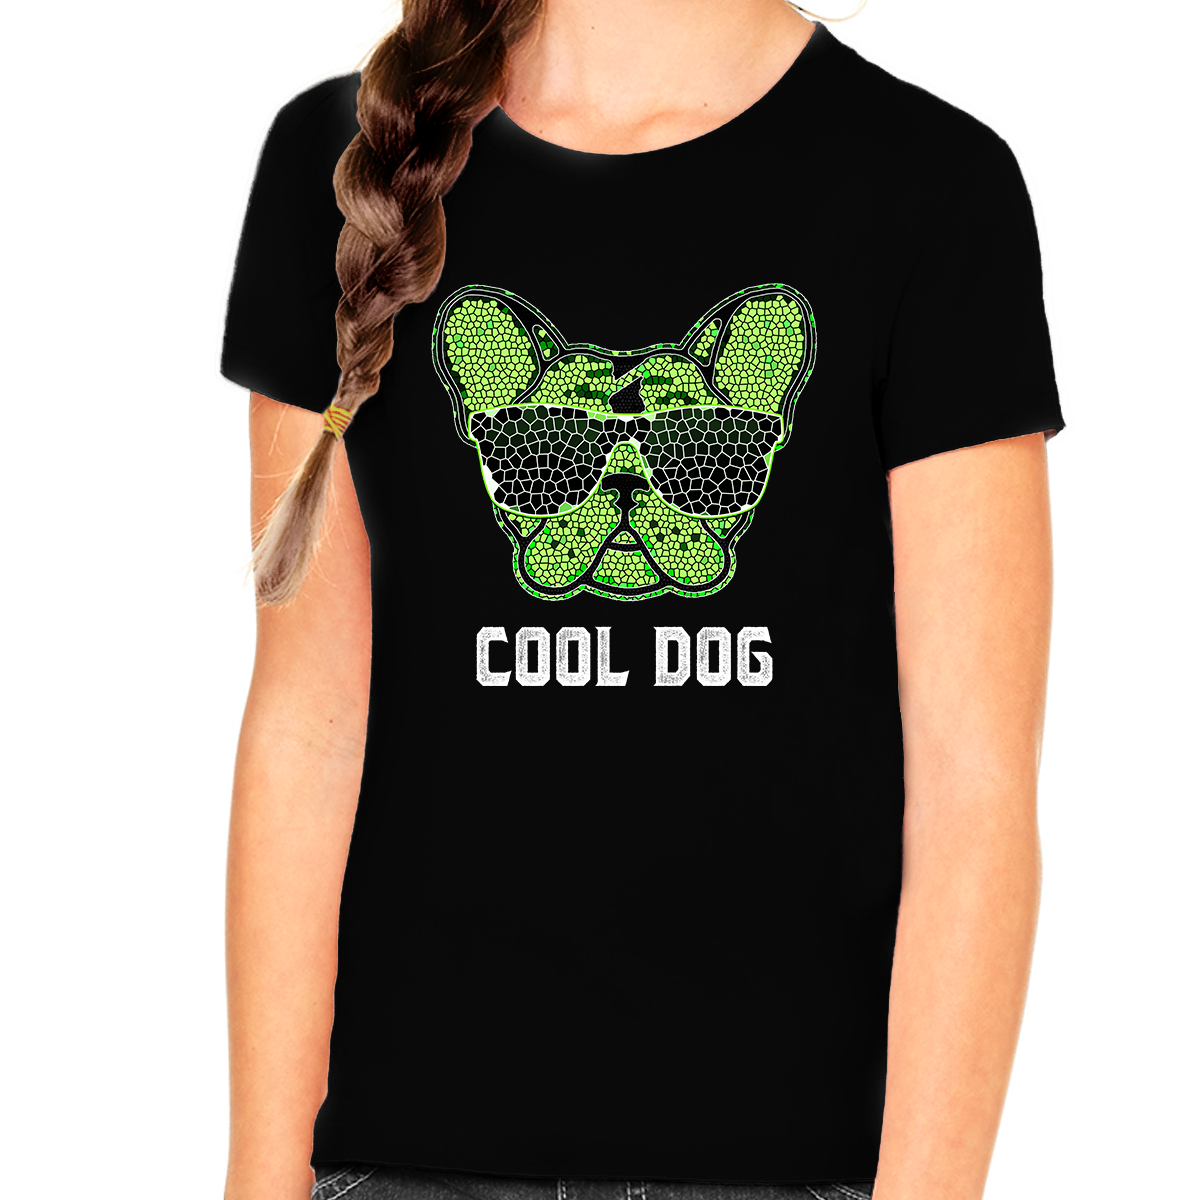 Cool Dog Shirt - Dog Shirts for Girls - Dog Gifts for Girls - Kids Dog Lover Shirts - Fire Fit Designs